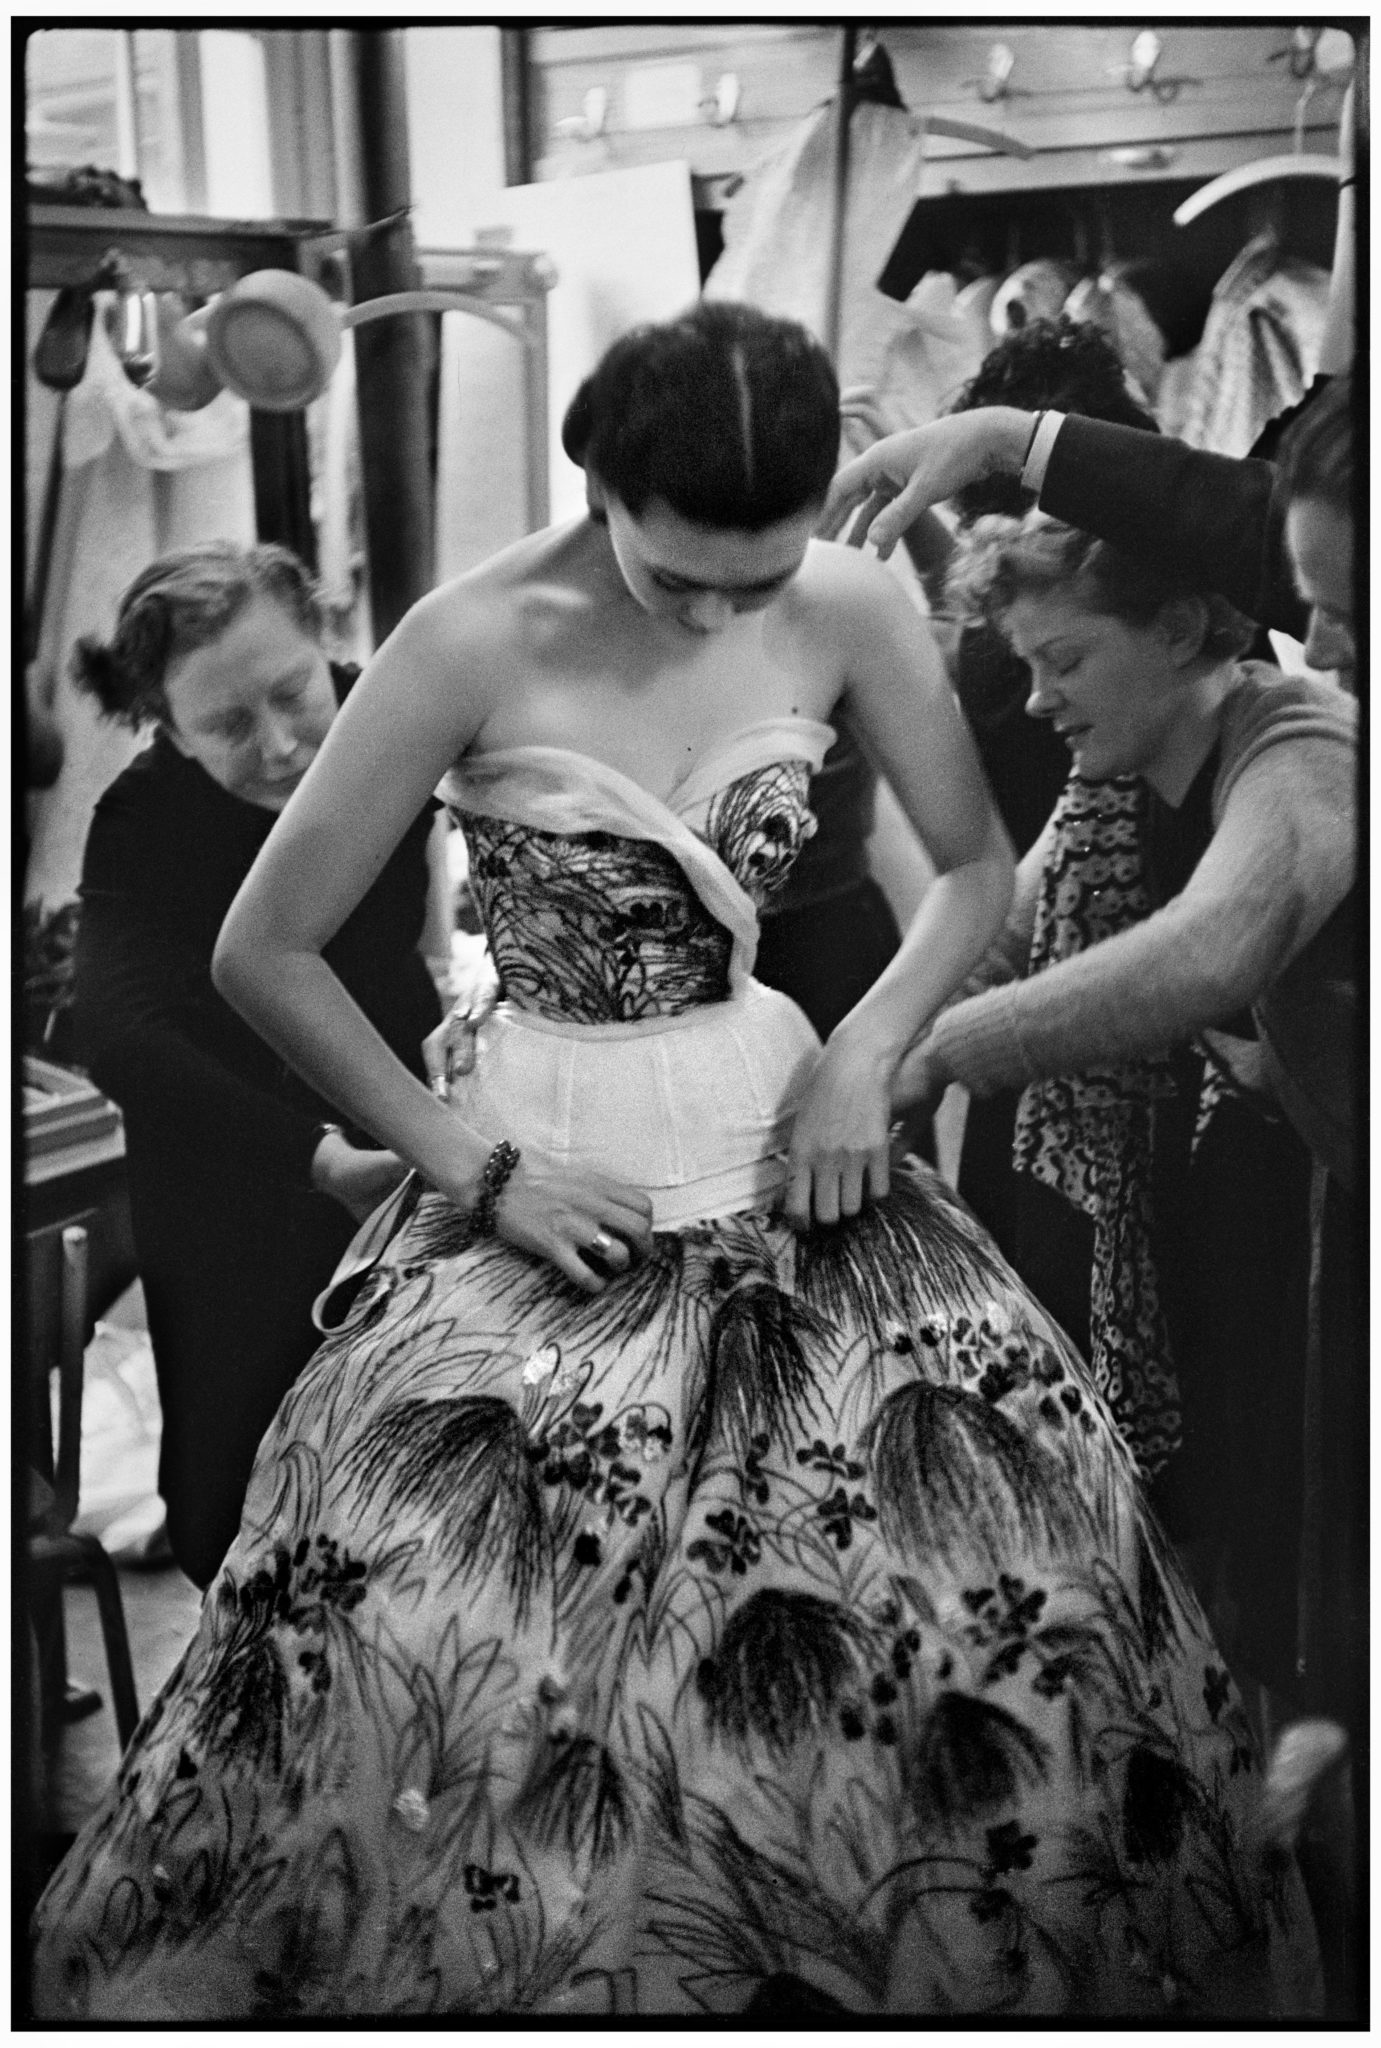 FRANCE. Paris. Spring 1953. Dior fashion house. Model before a show. FRANCE. Paris. Spring 1953. Dior fashion house. Model before a show.